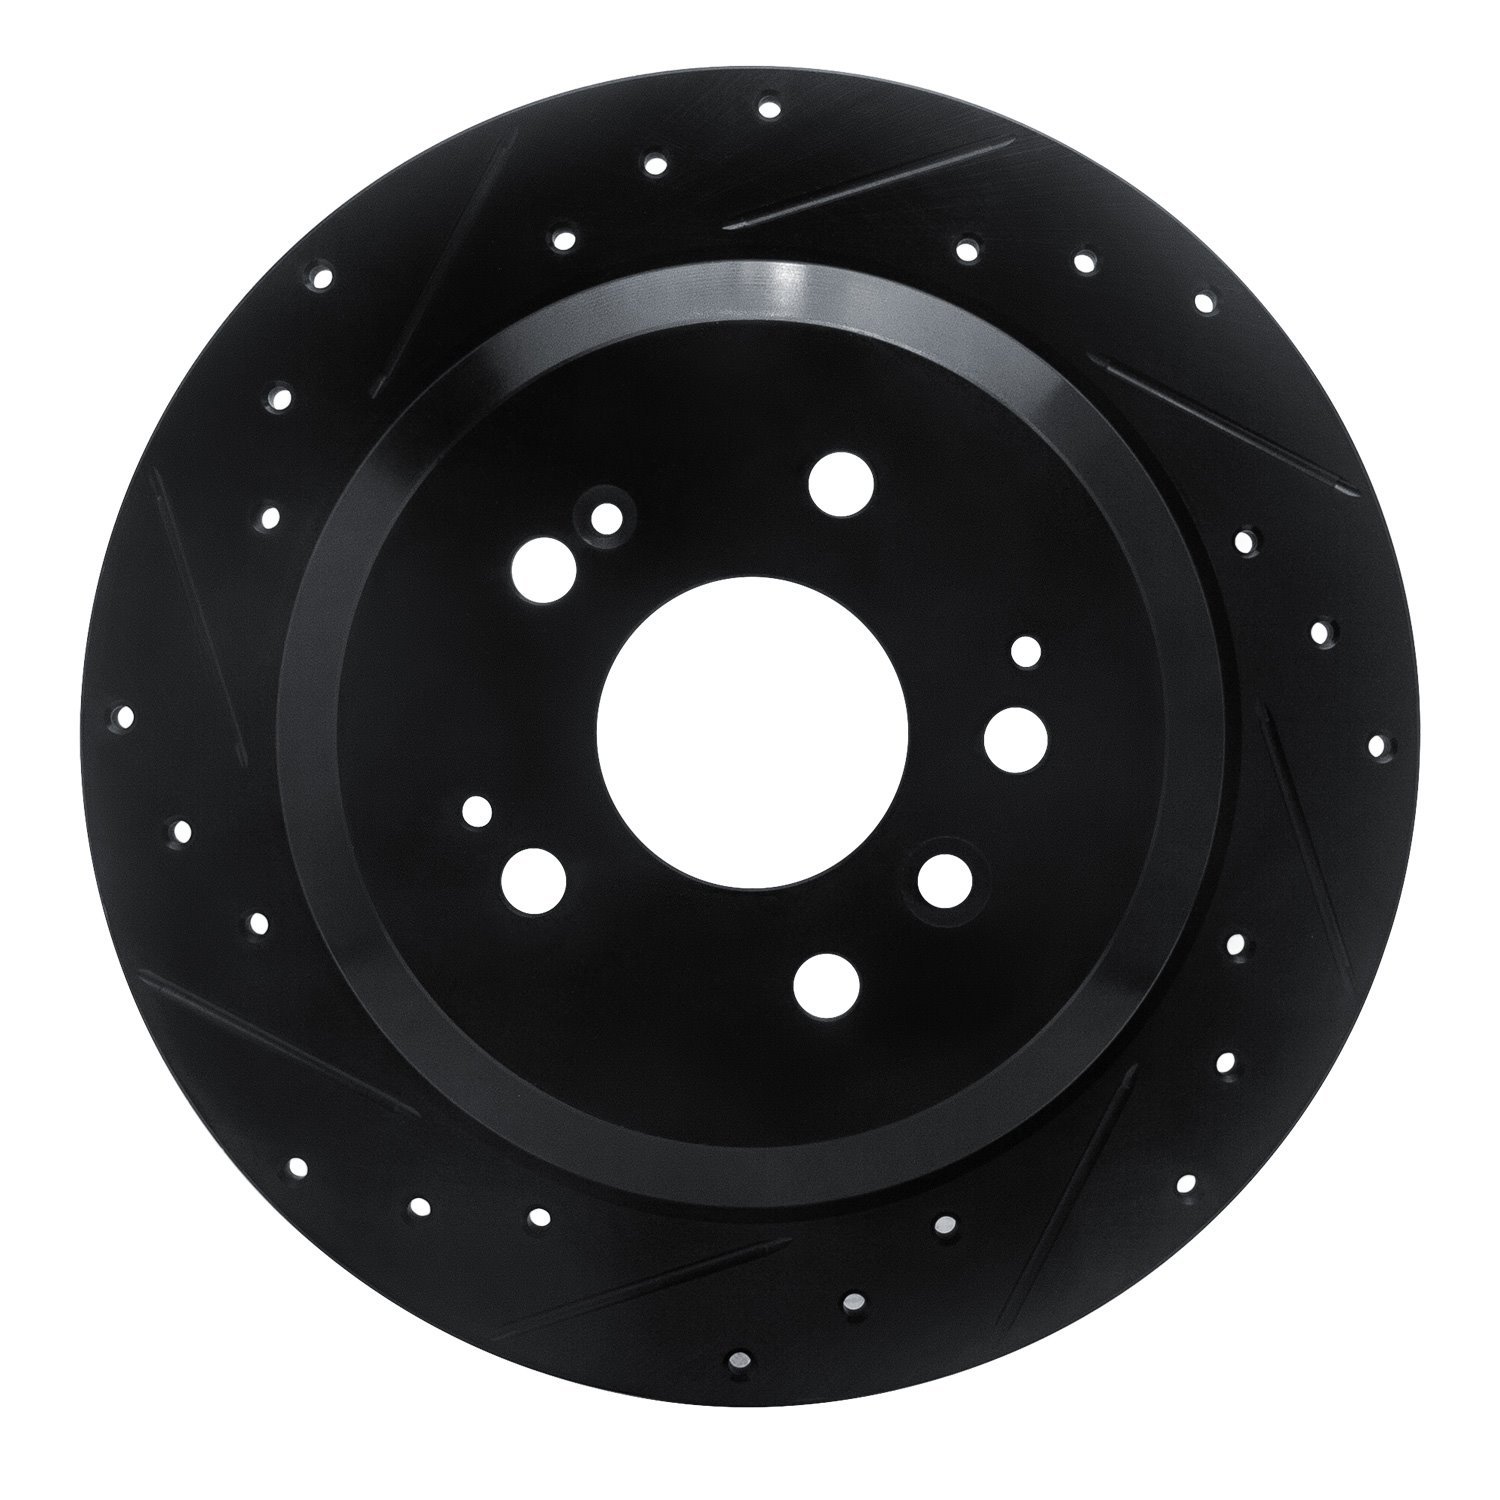 Drilled/Slotted Brake Rotor [Black], Fits Select Acura/Honda